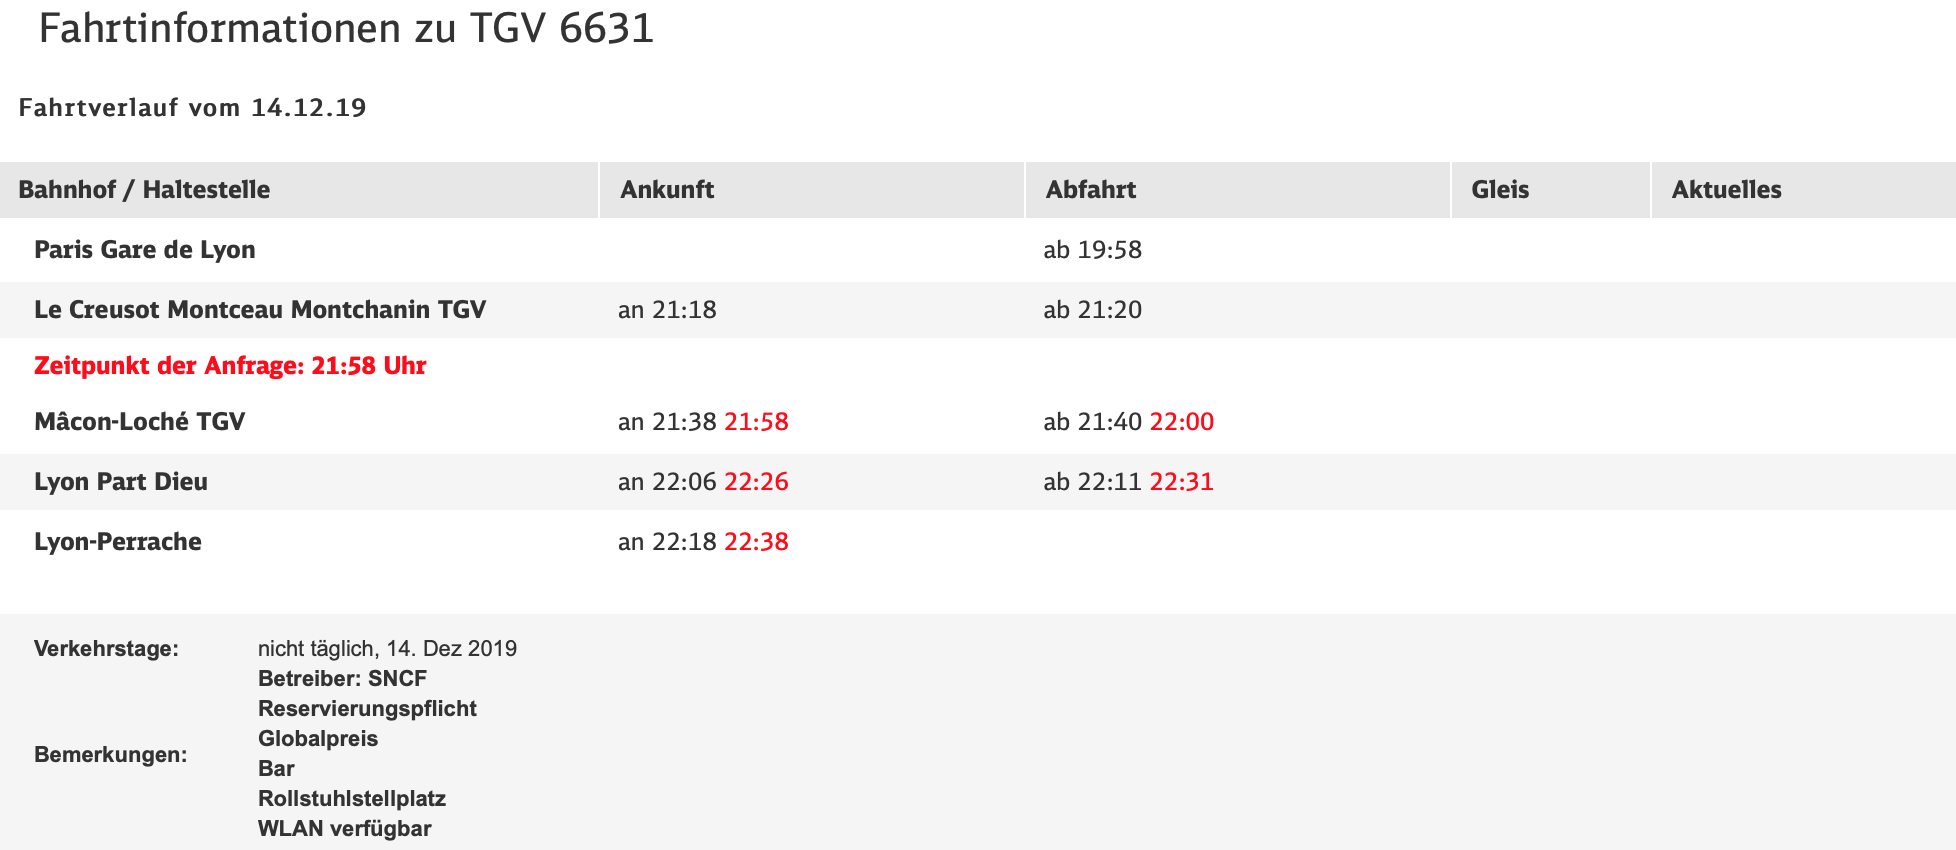 bahn.de showing TGV 6631